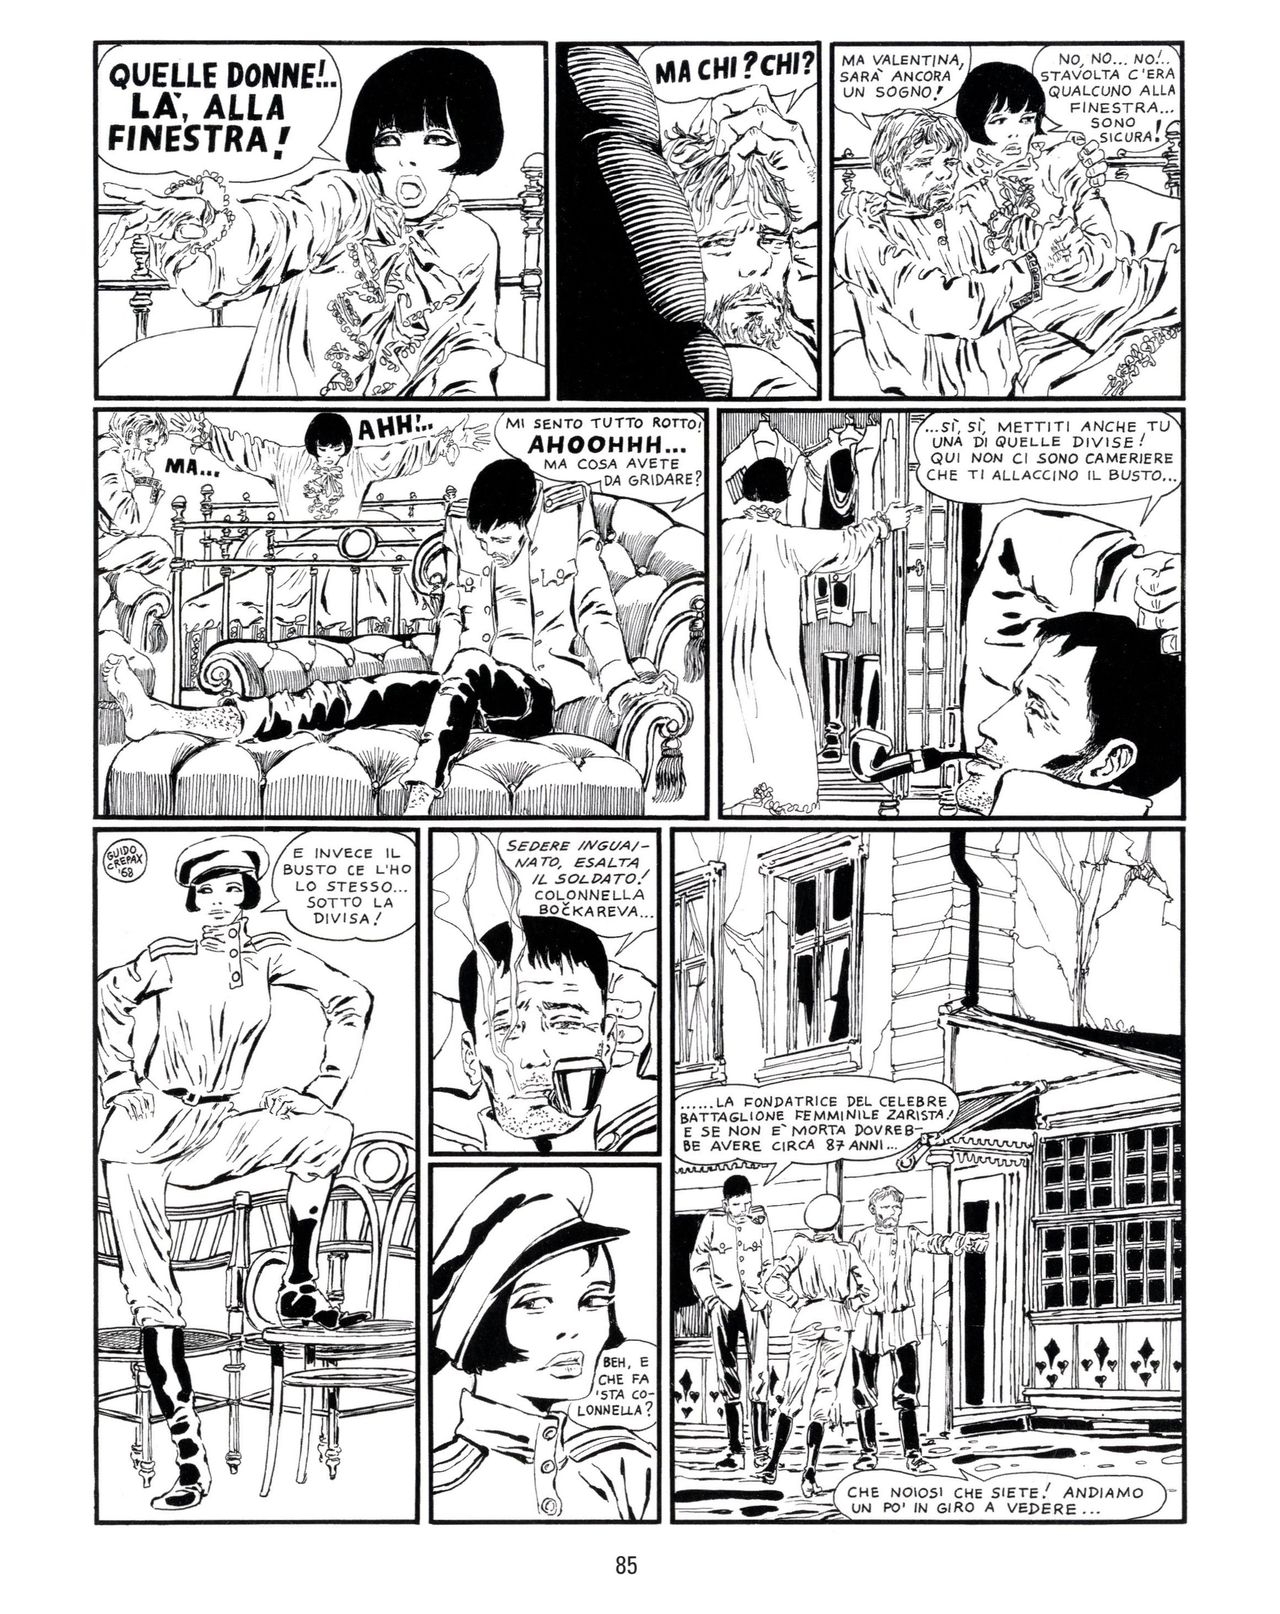 [Guido Crepax] Erotica Fumetti #25 : L'ascesa dei sotterranei : I cavalieri ciechi [Italian] 86